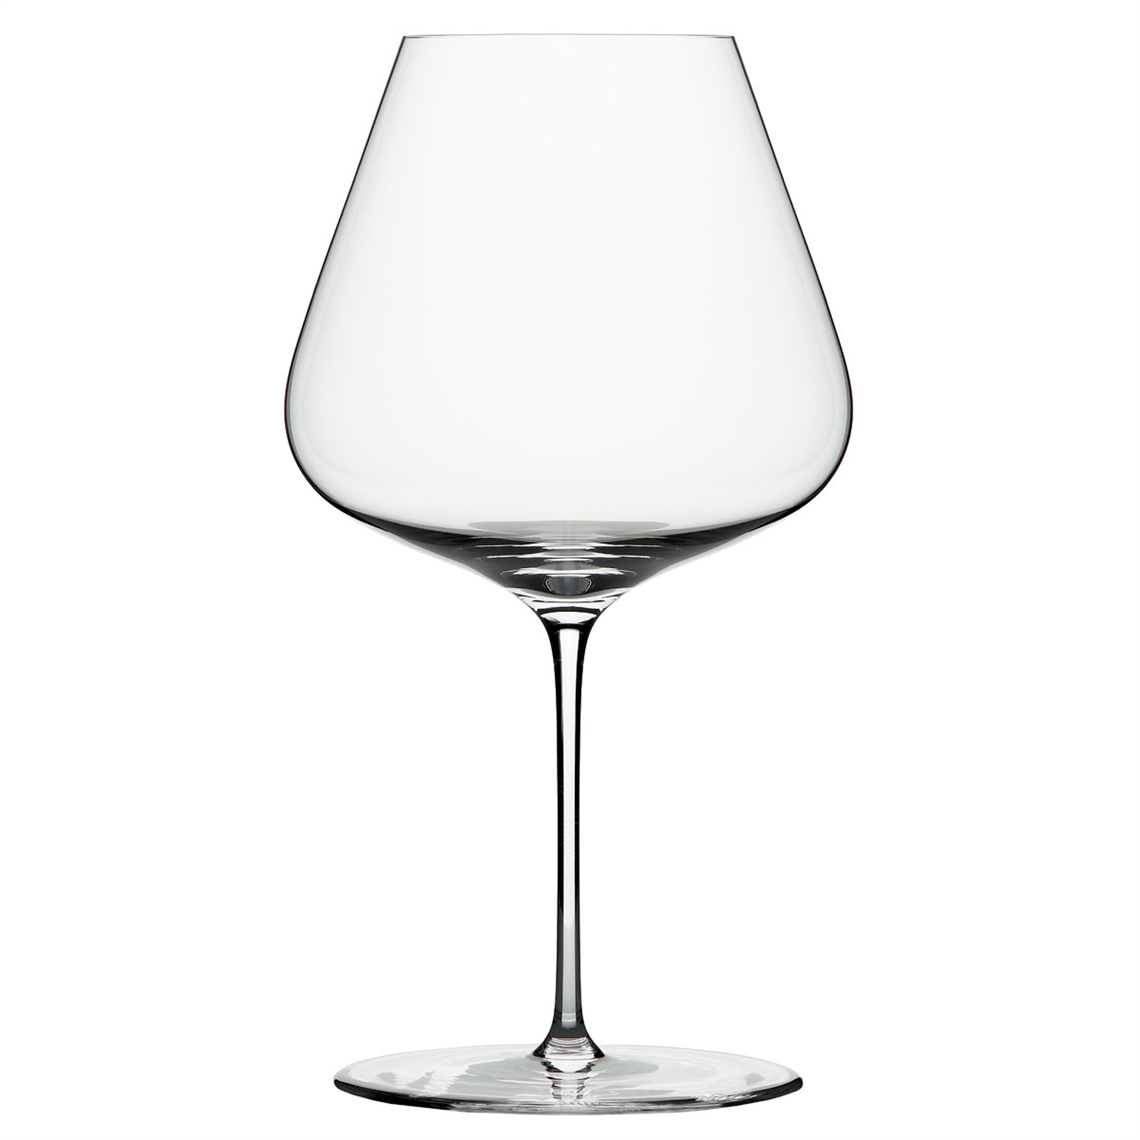 Zalto Denk Art Burgundy  wine glasse authentic new 